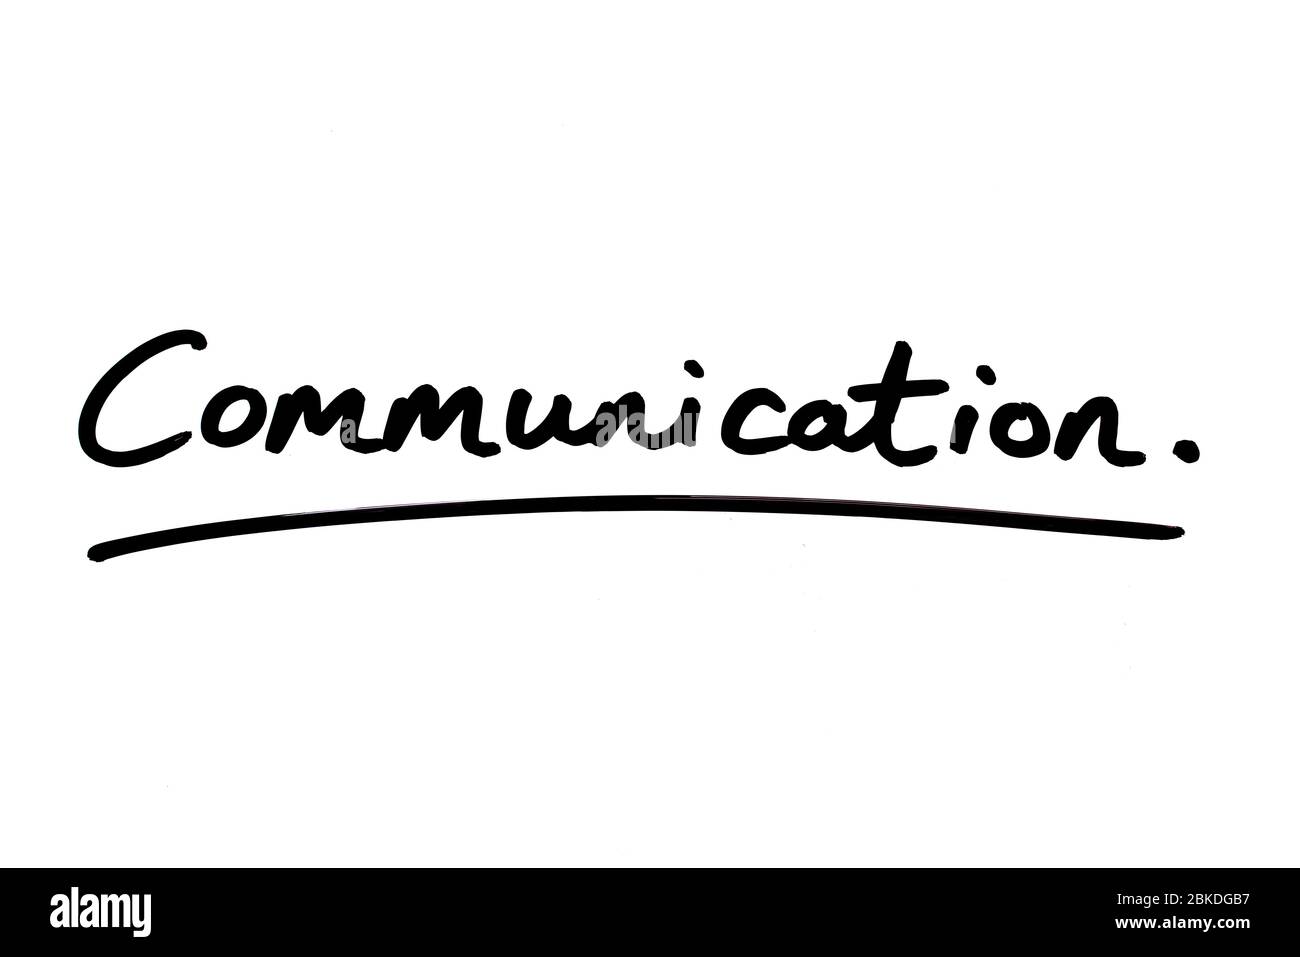 Communication handwritten on a white background. Stock Photo